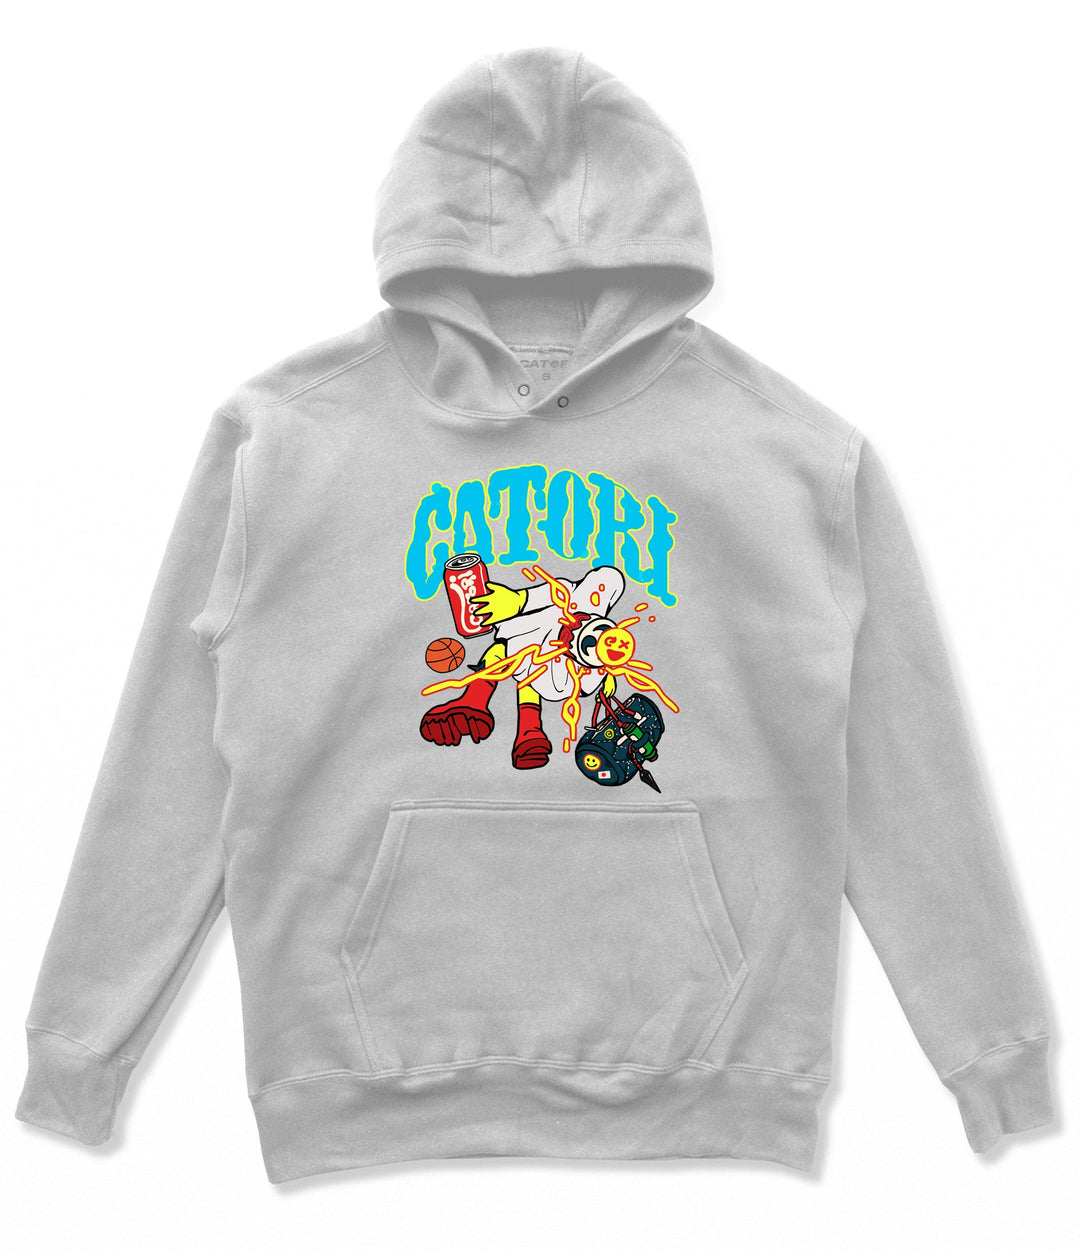 Shot Hoodie at Catori Clothing | Graphic & Anime Tees, Hoodies & Sweatshirts 